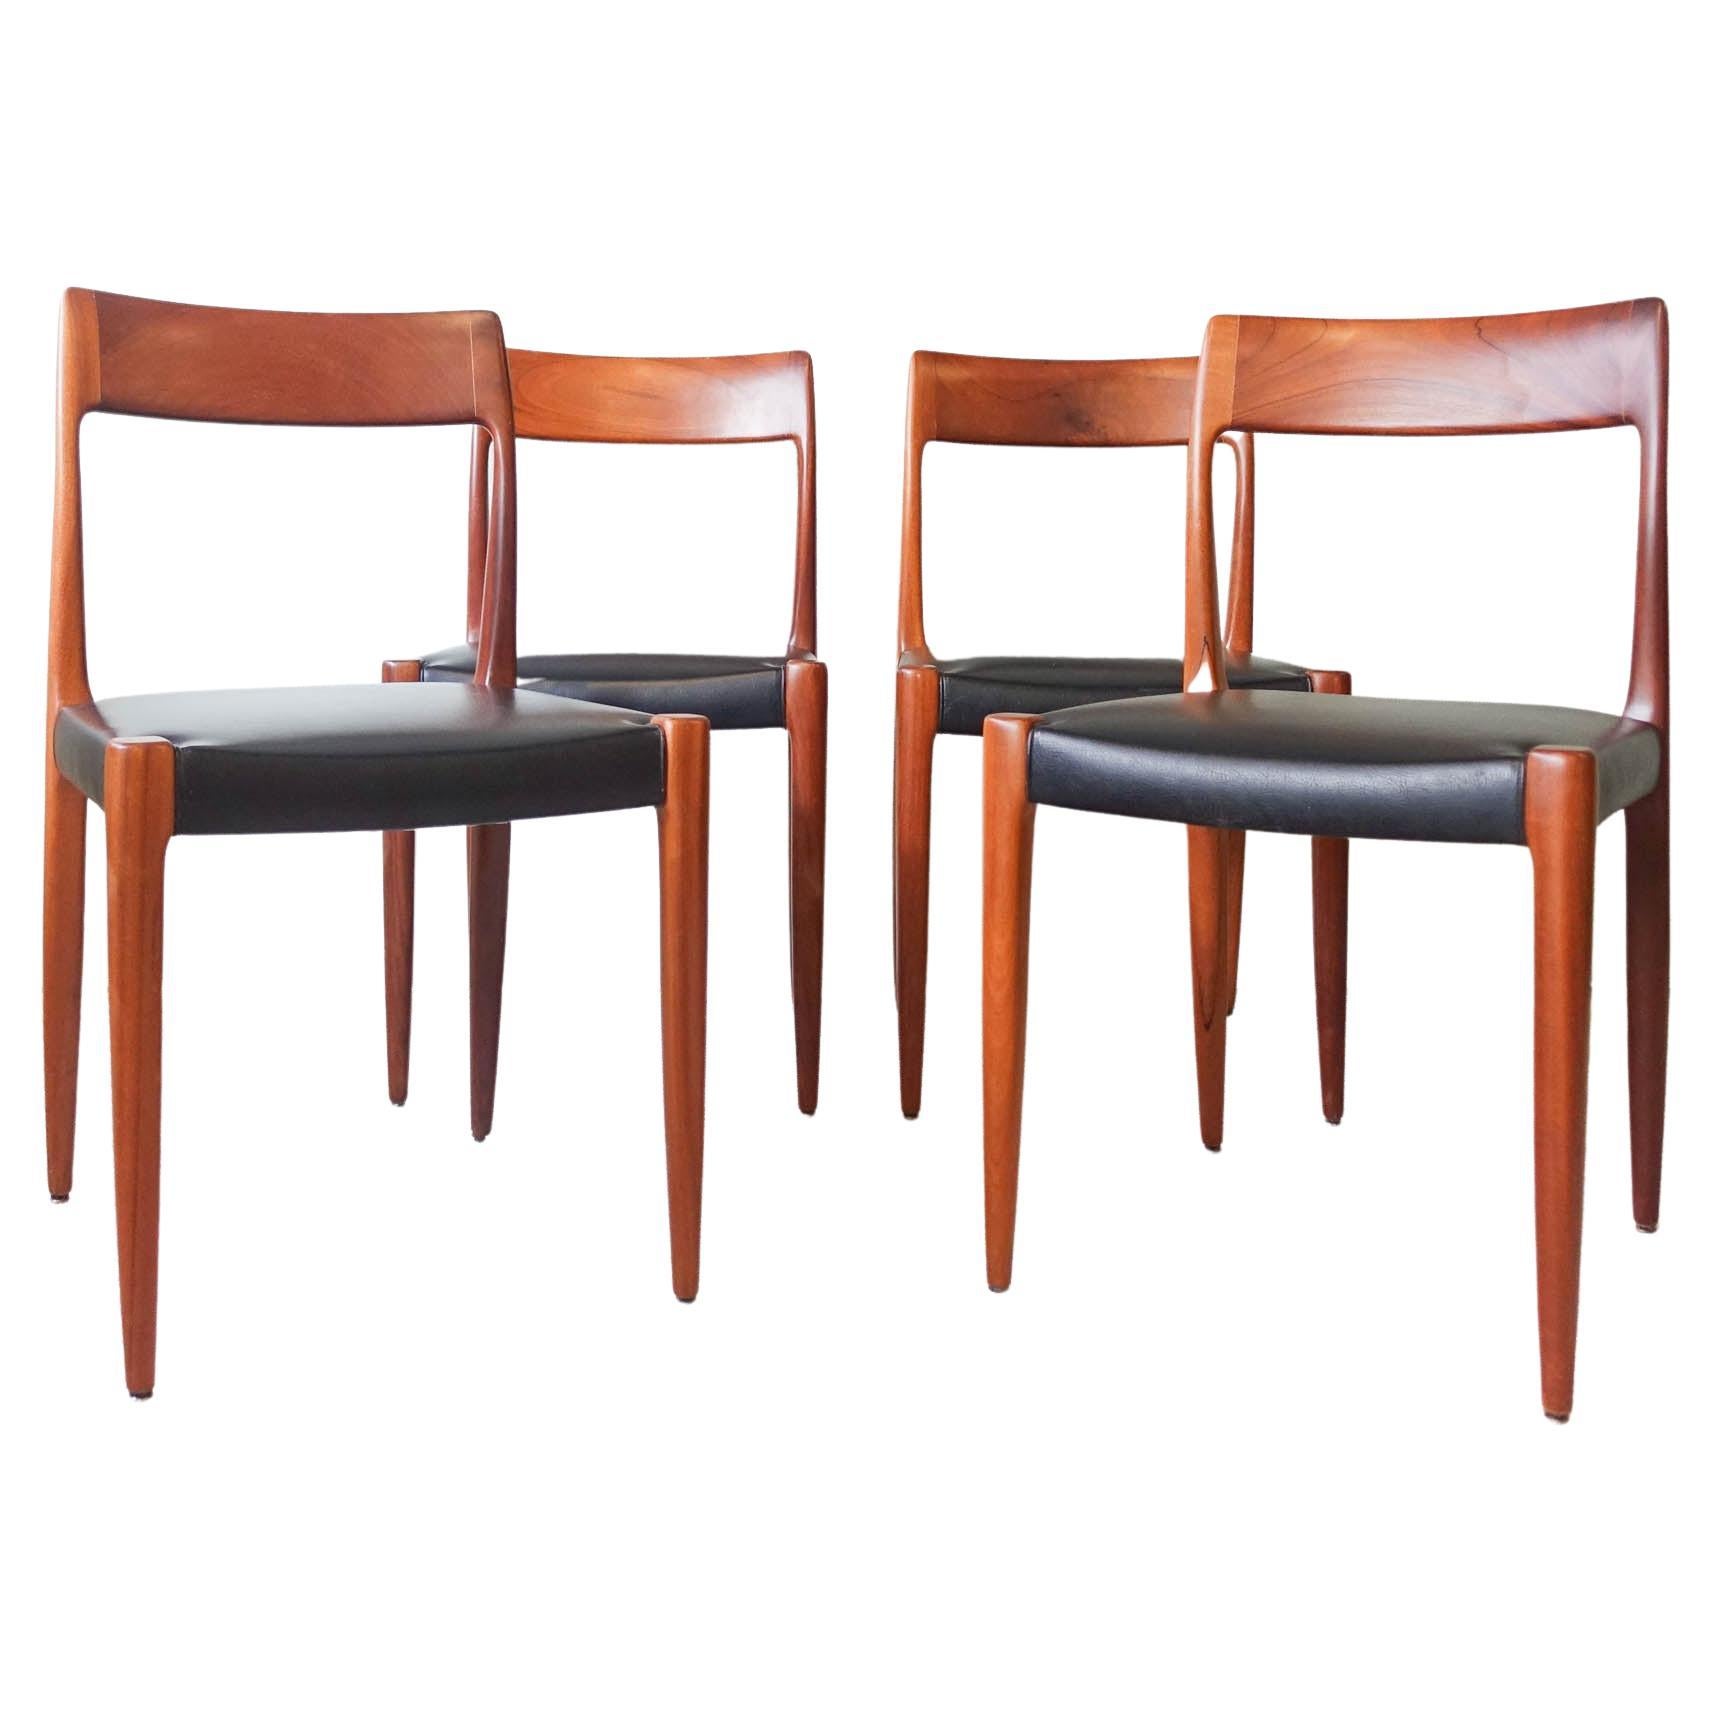 Set of 4 Olaio Chairs Model Caravela by José Espinho, 1965